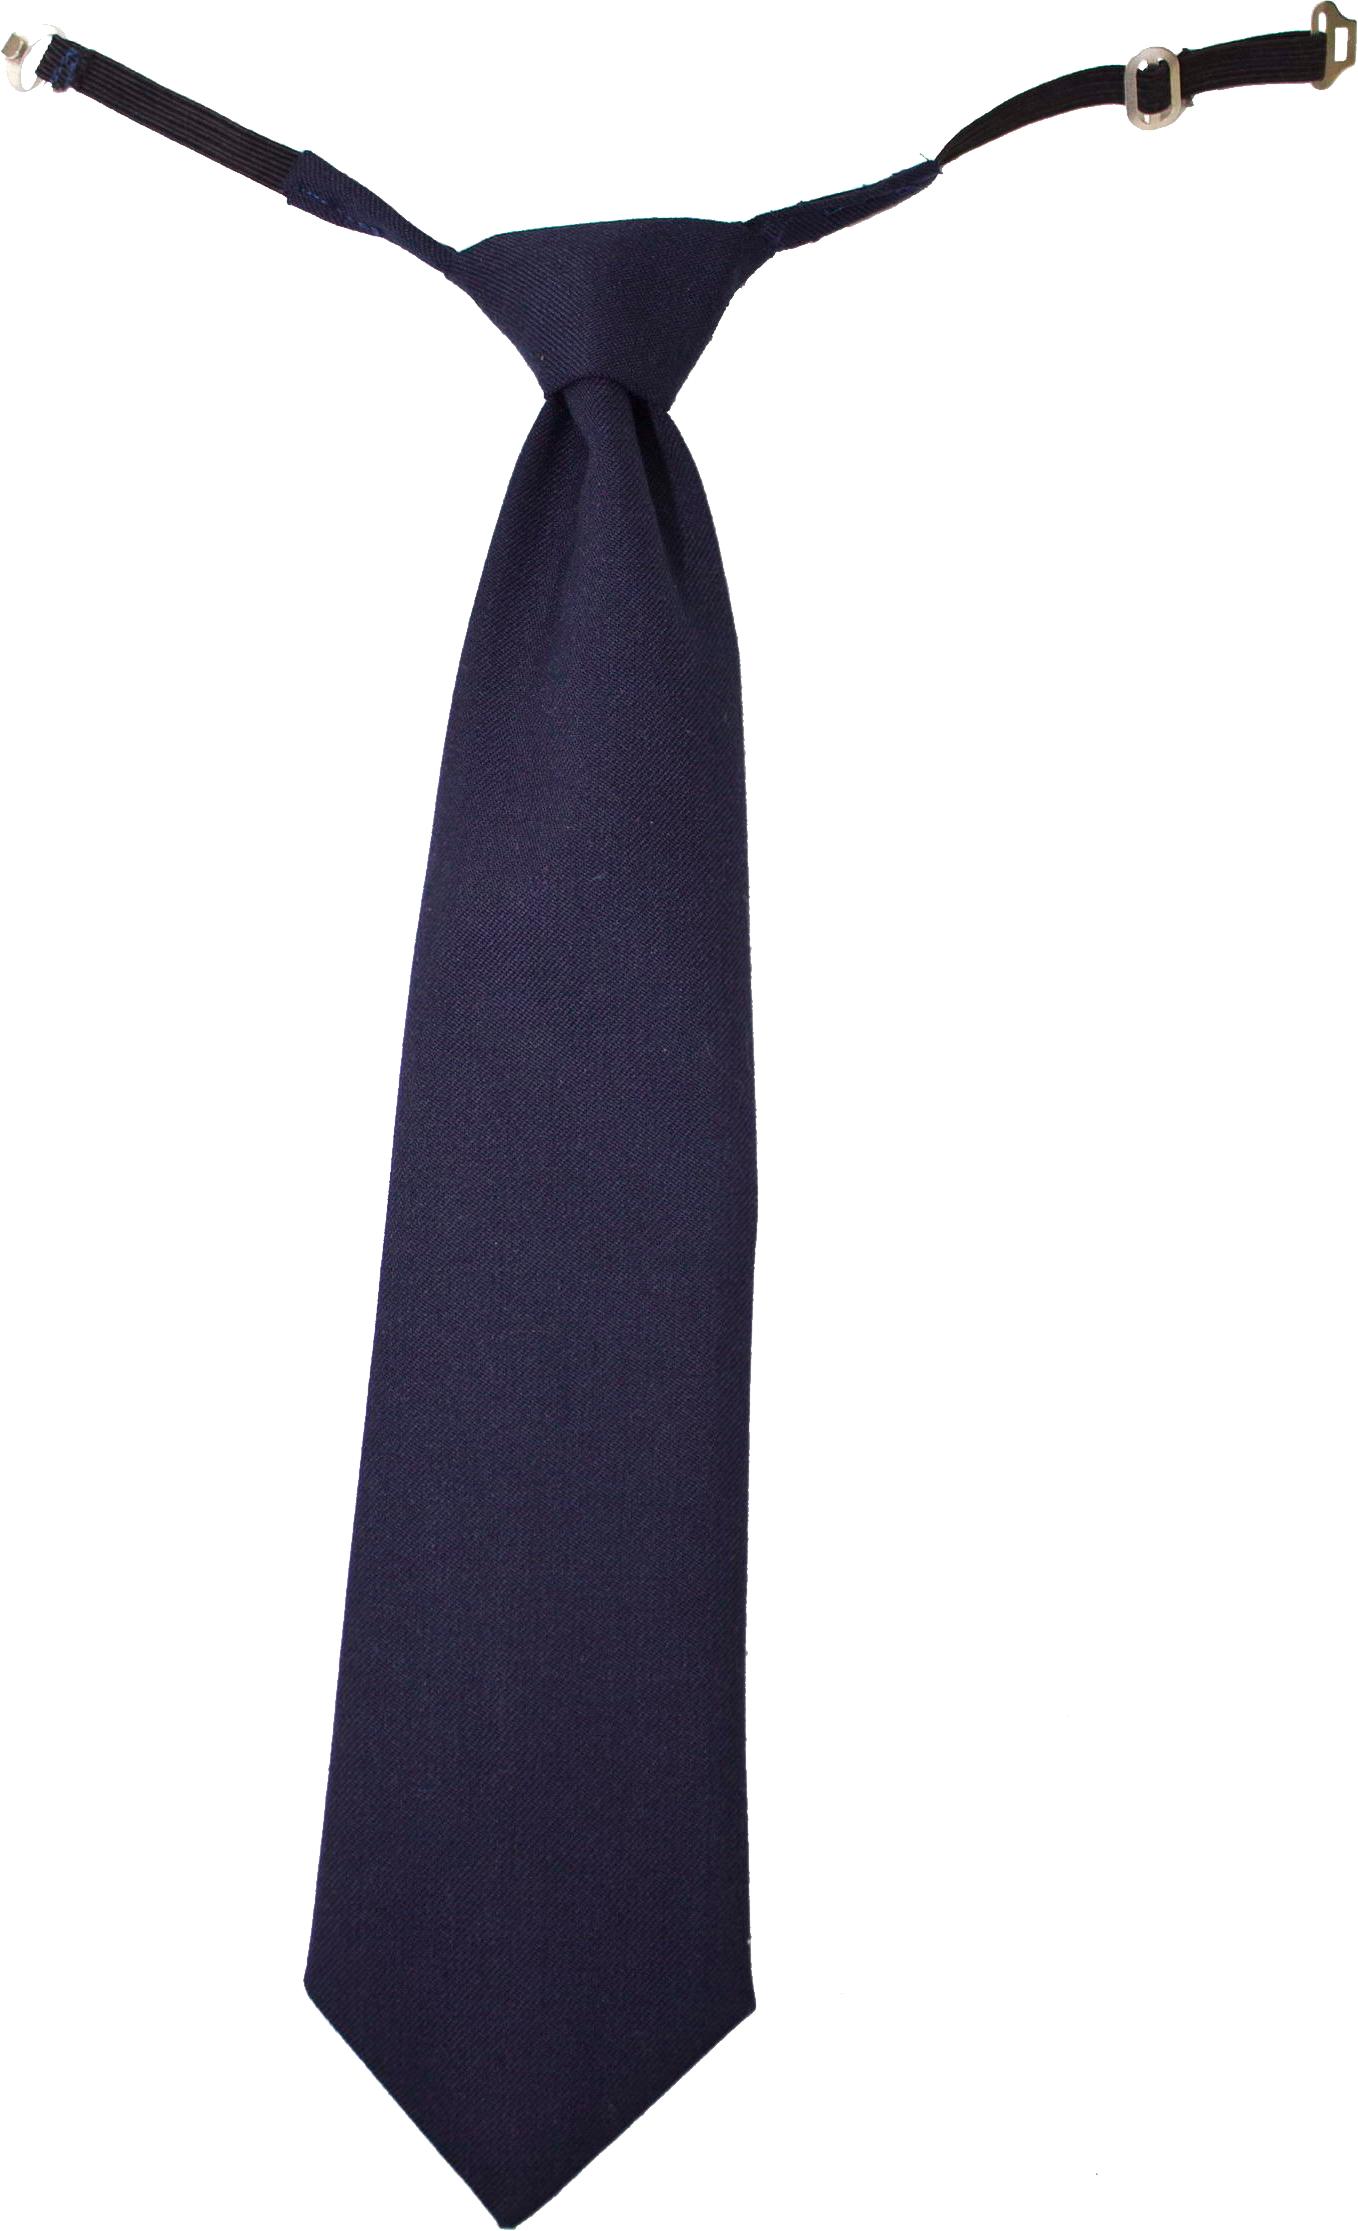 free clipart black tie - photo #45